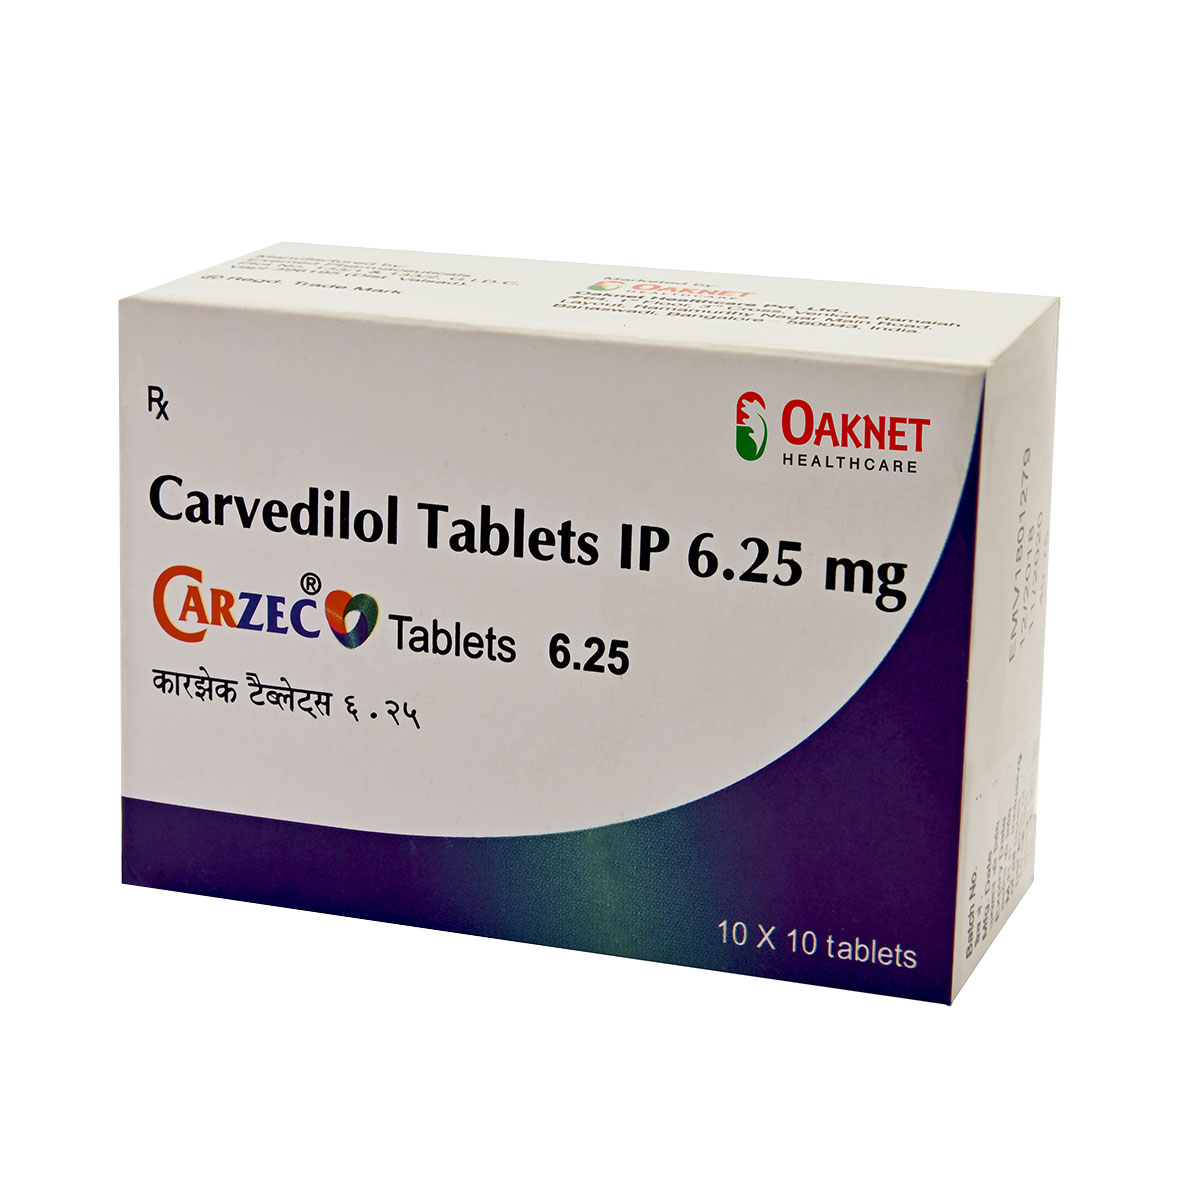 Carzec-6-5-INT